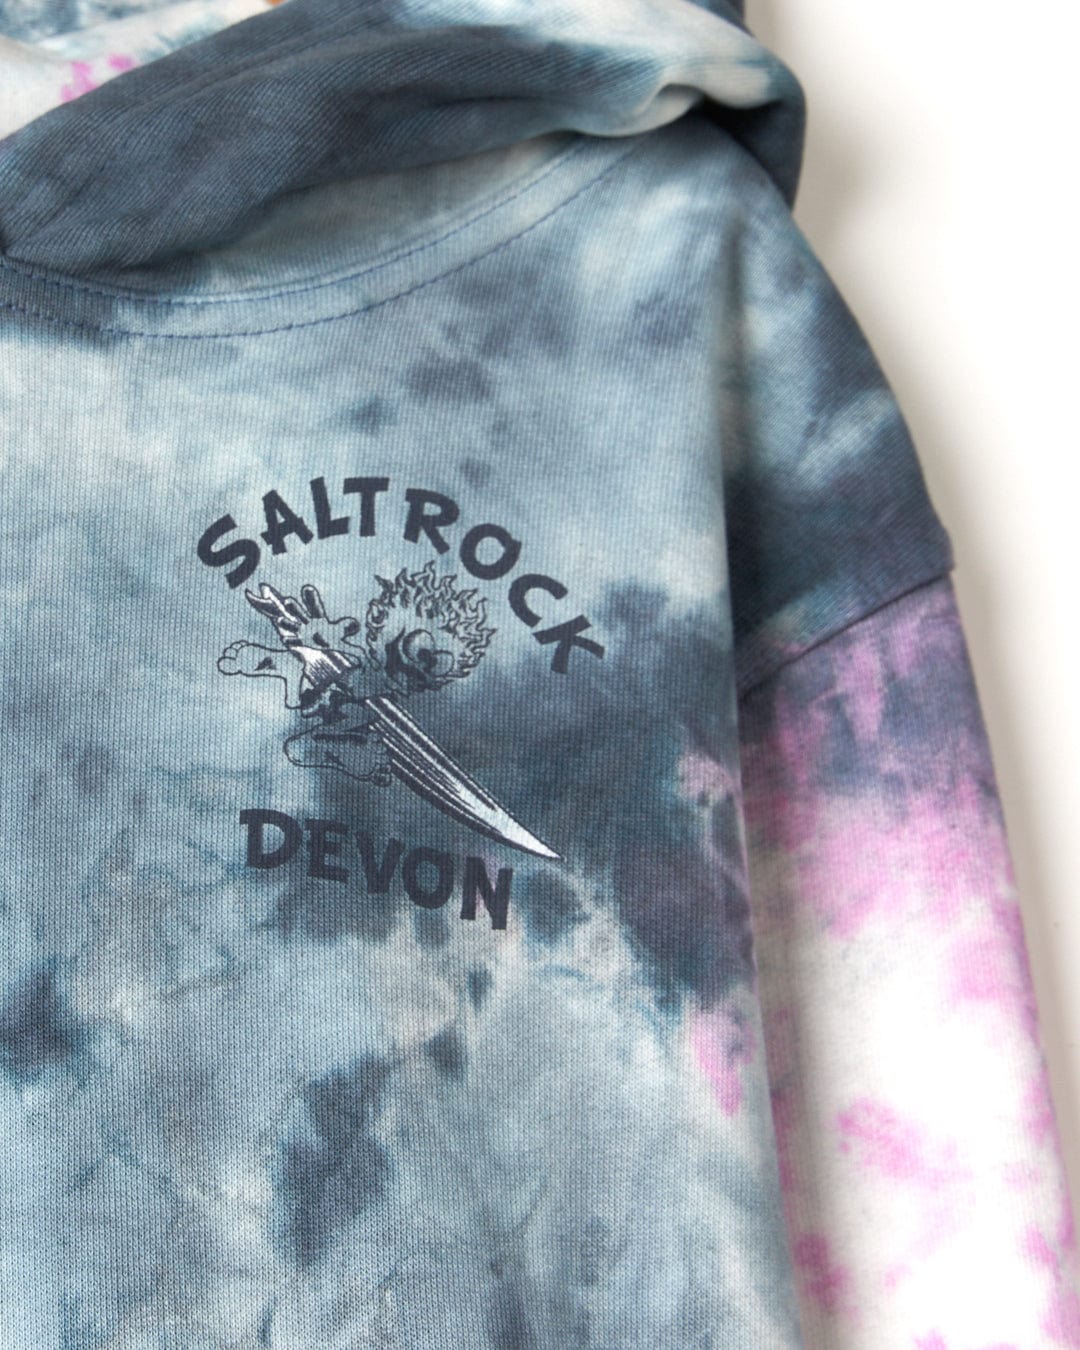 Wave Rider Devon - Kids Tie Dye Pop Hoodie - Pink/Grey by Saltrock.